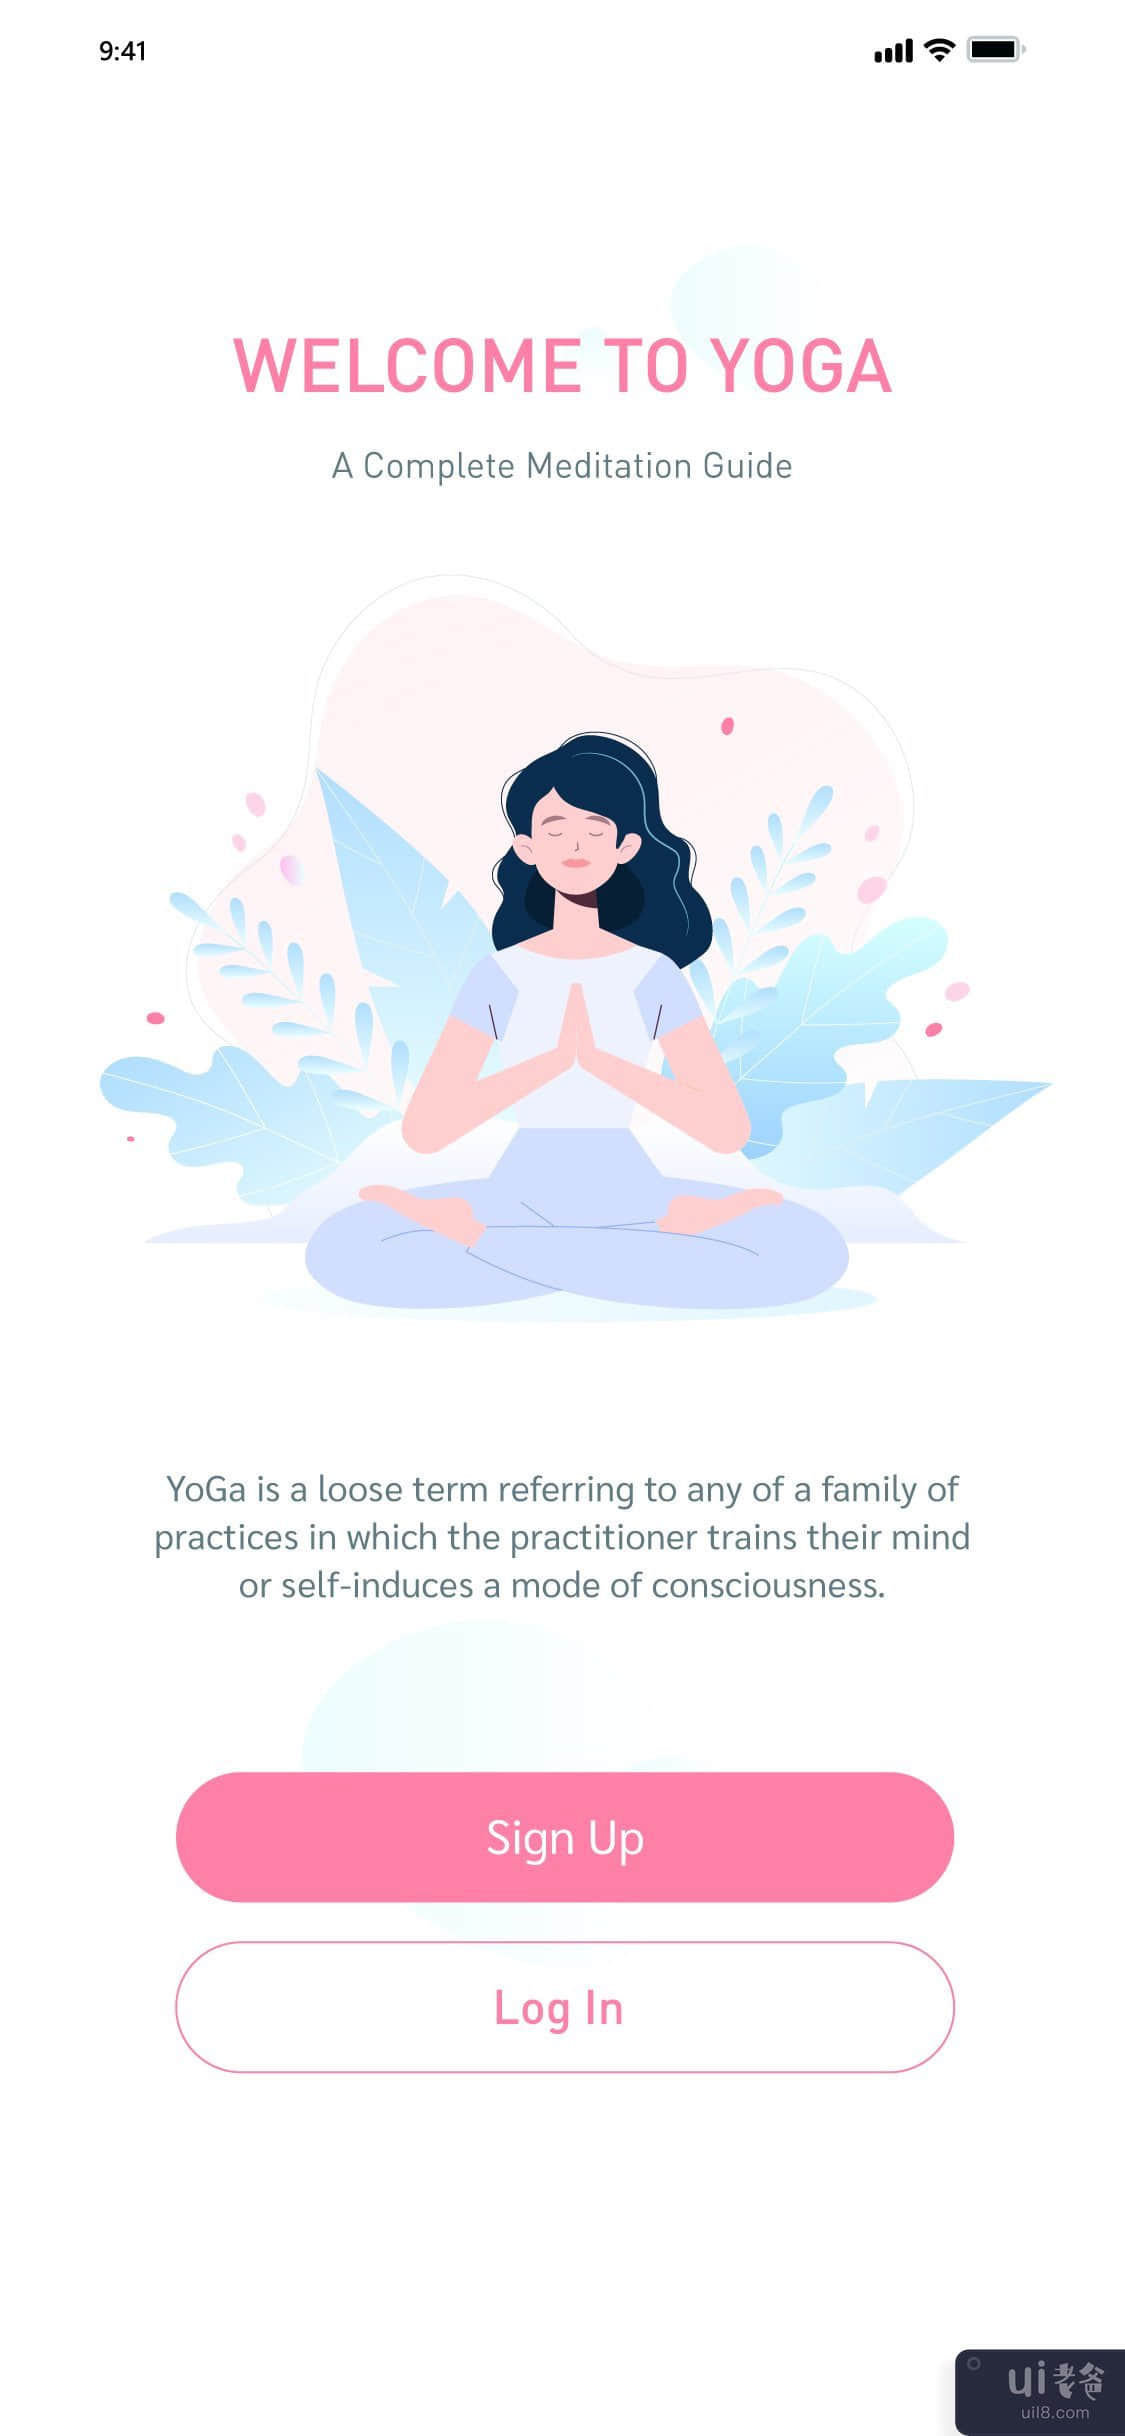 瑜伽应用程序入职概念(Yoga App Onboarding Concept)插图